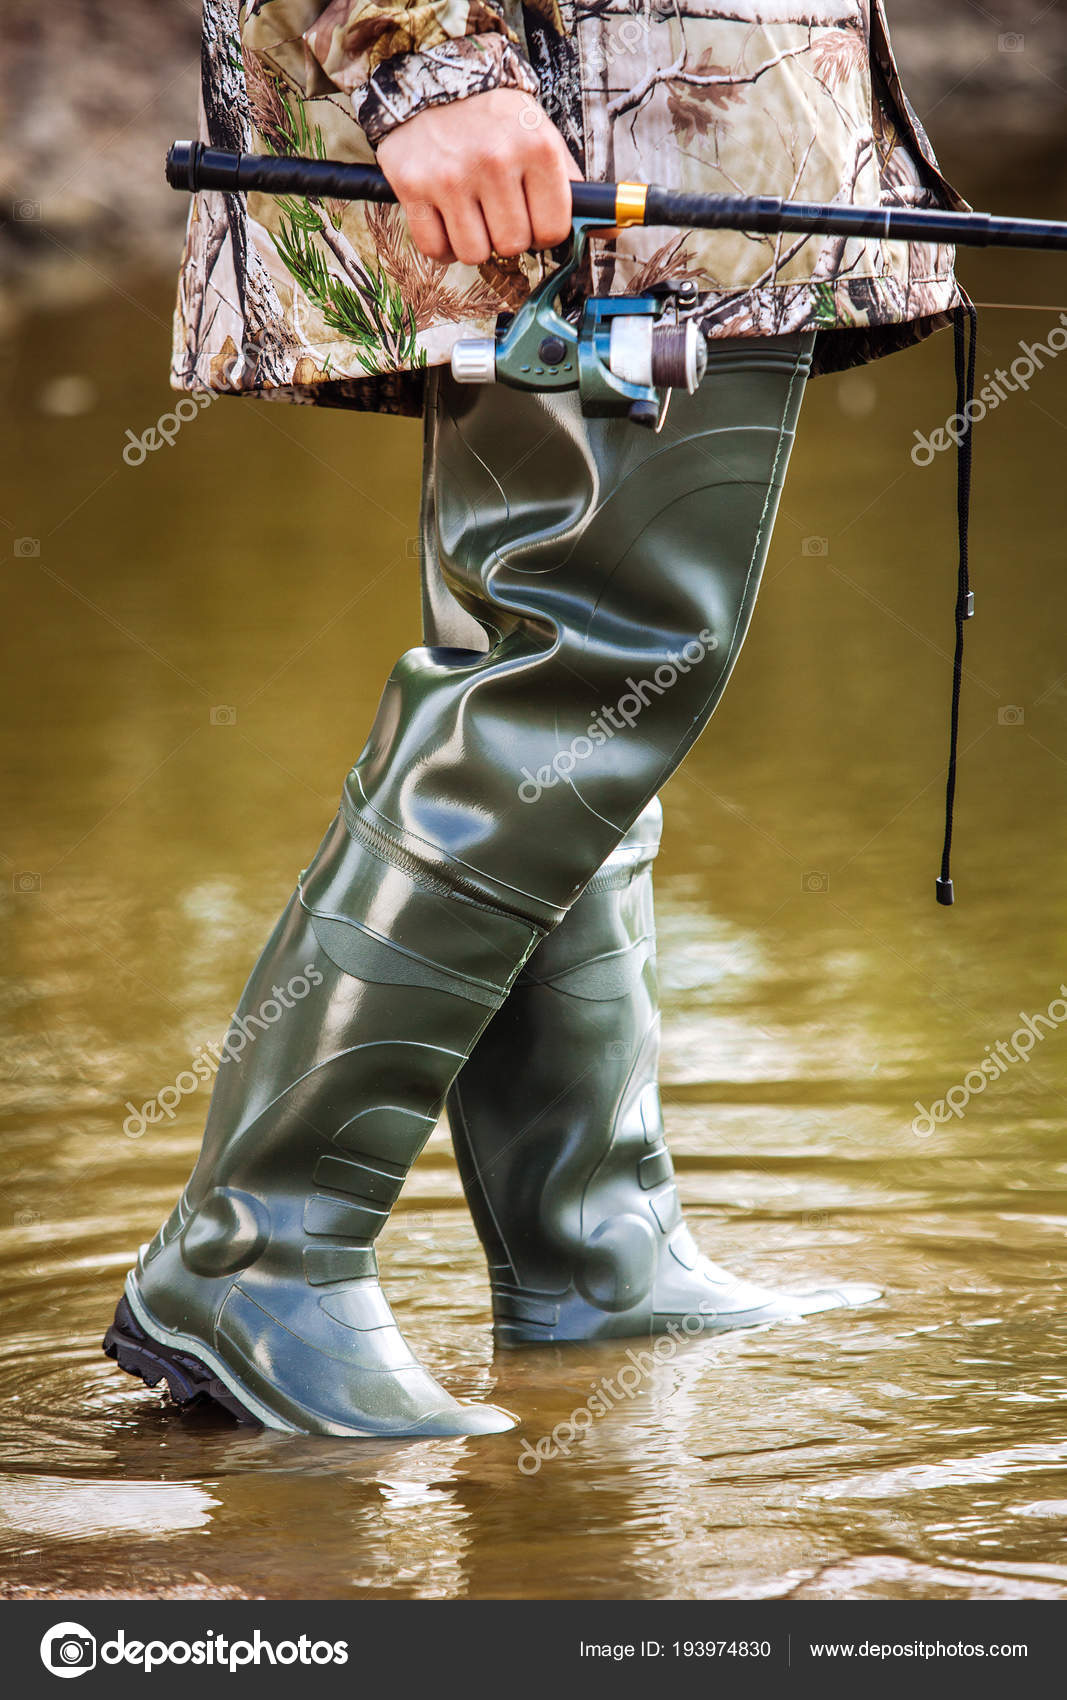 https://st3.depositphotos.com/1961865/19397/i/1600/depositphotos_193974830-stock-photo-fisherman-stands-rubber-boots-swamp.jpg